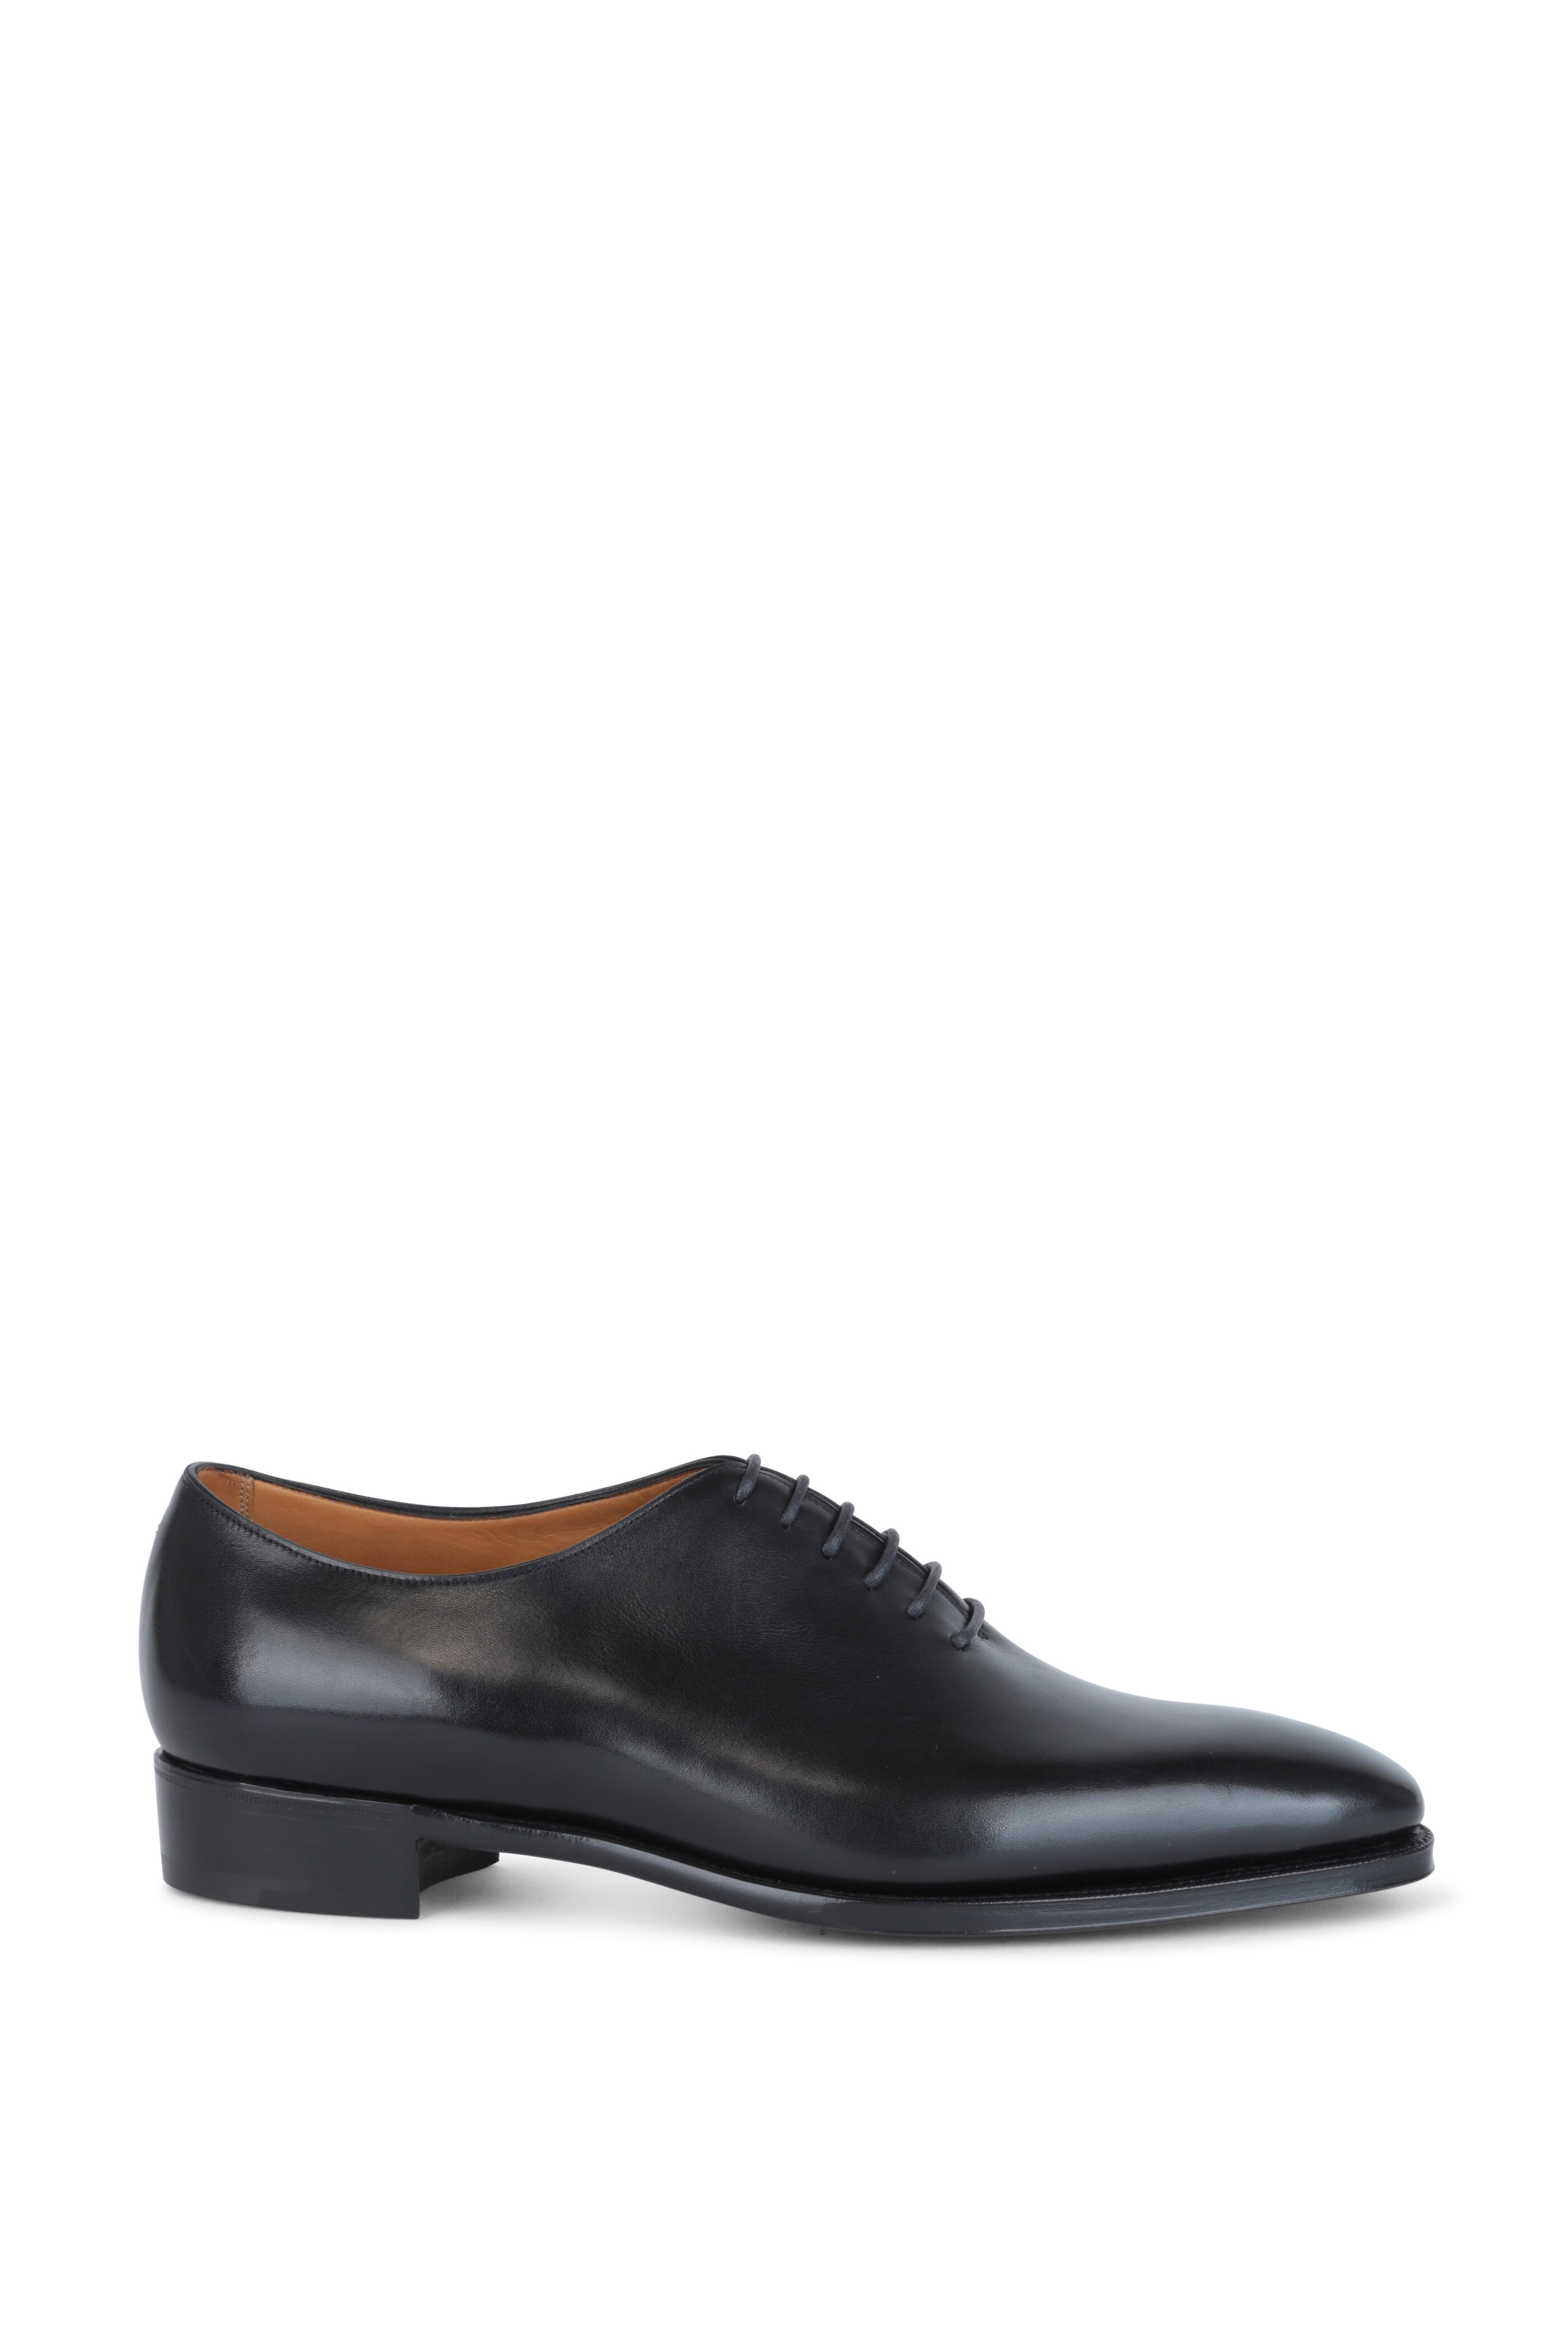 Gaziano & Girling - Sinatra Black Leather Oxford Dress Shoe